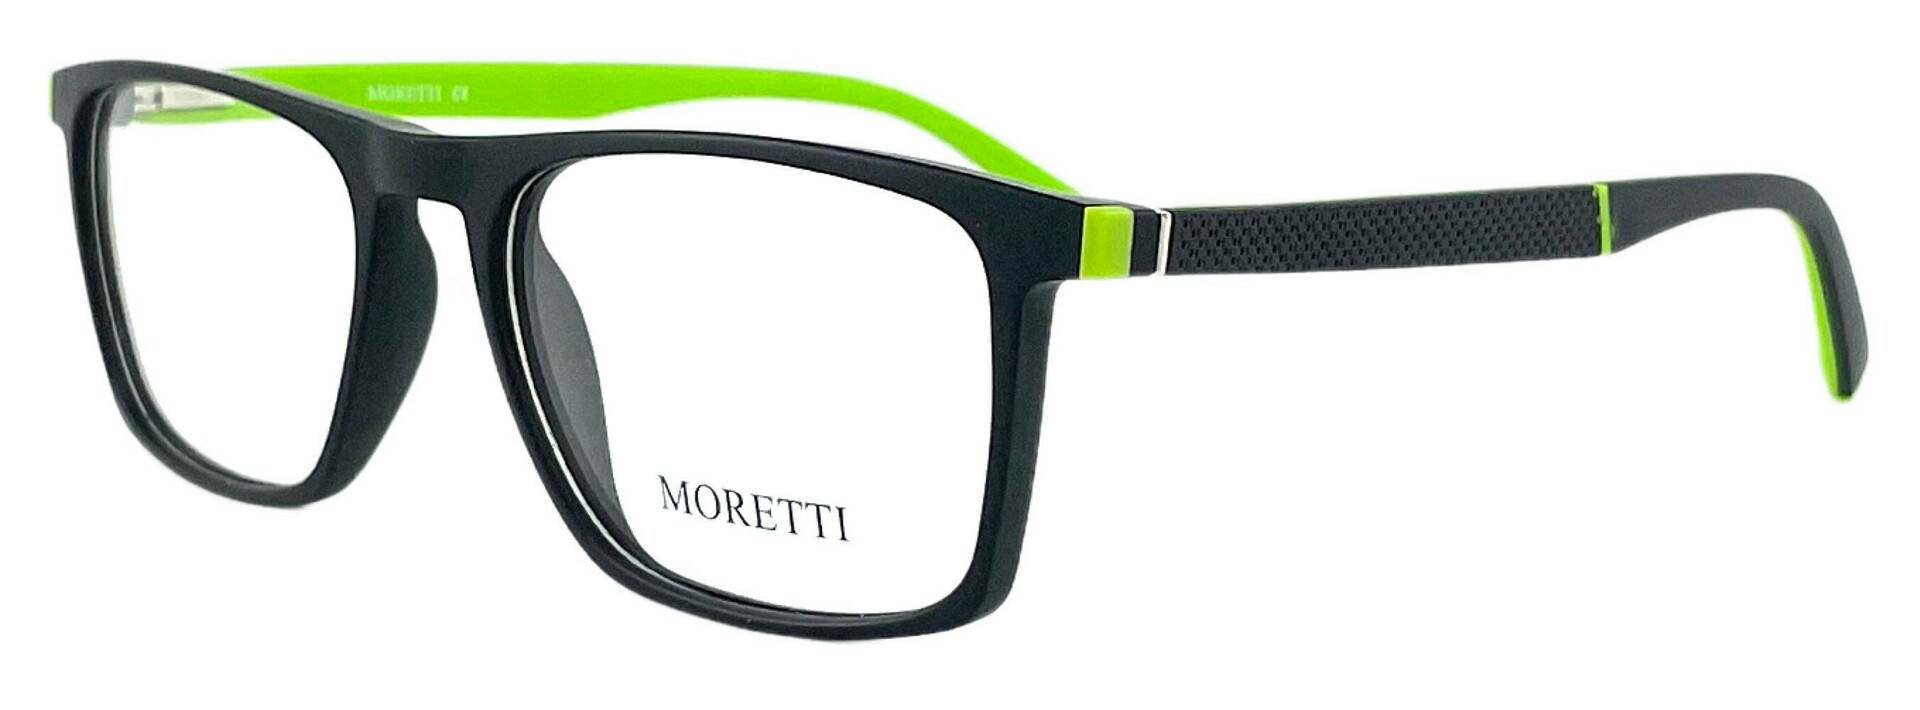 Moretti 80103 C4 2